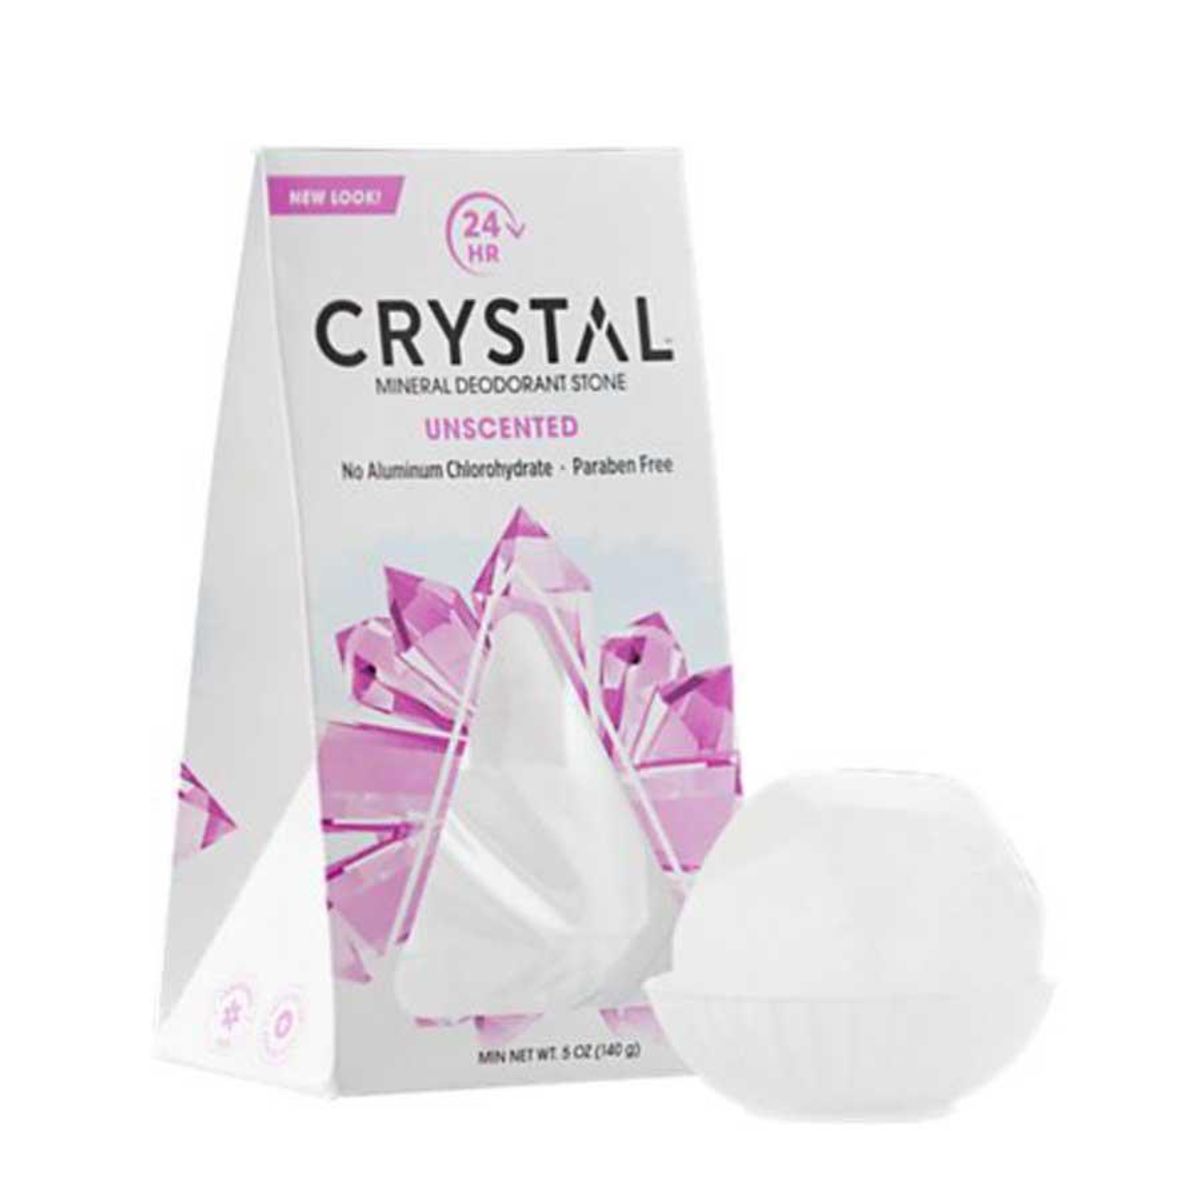 crystal mineral deodorant stone